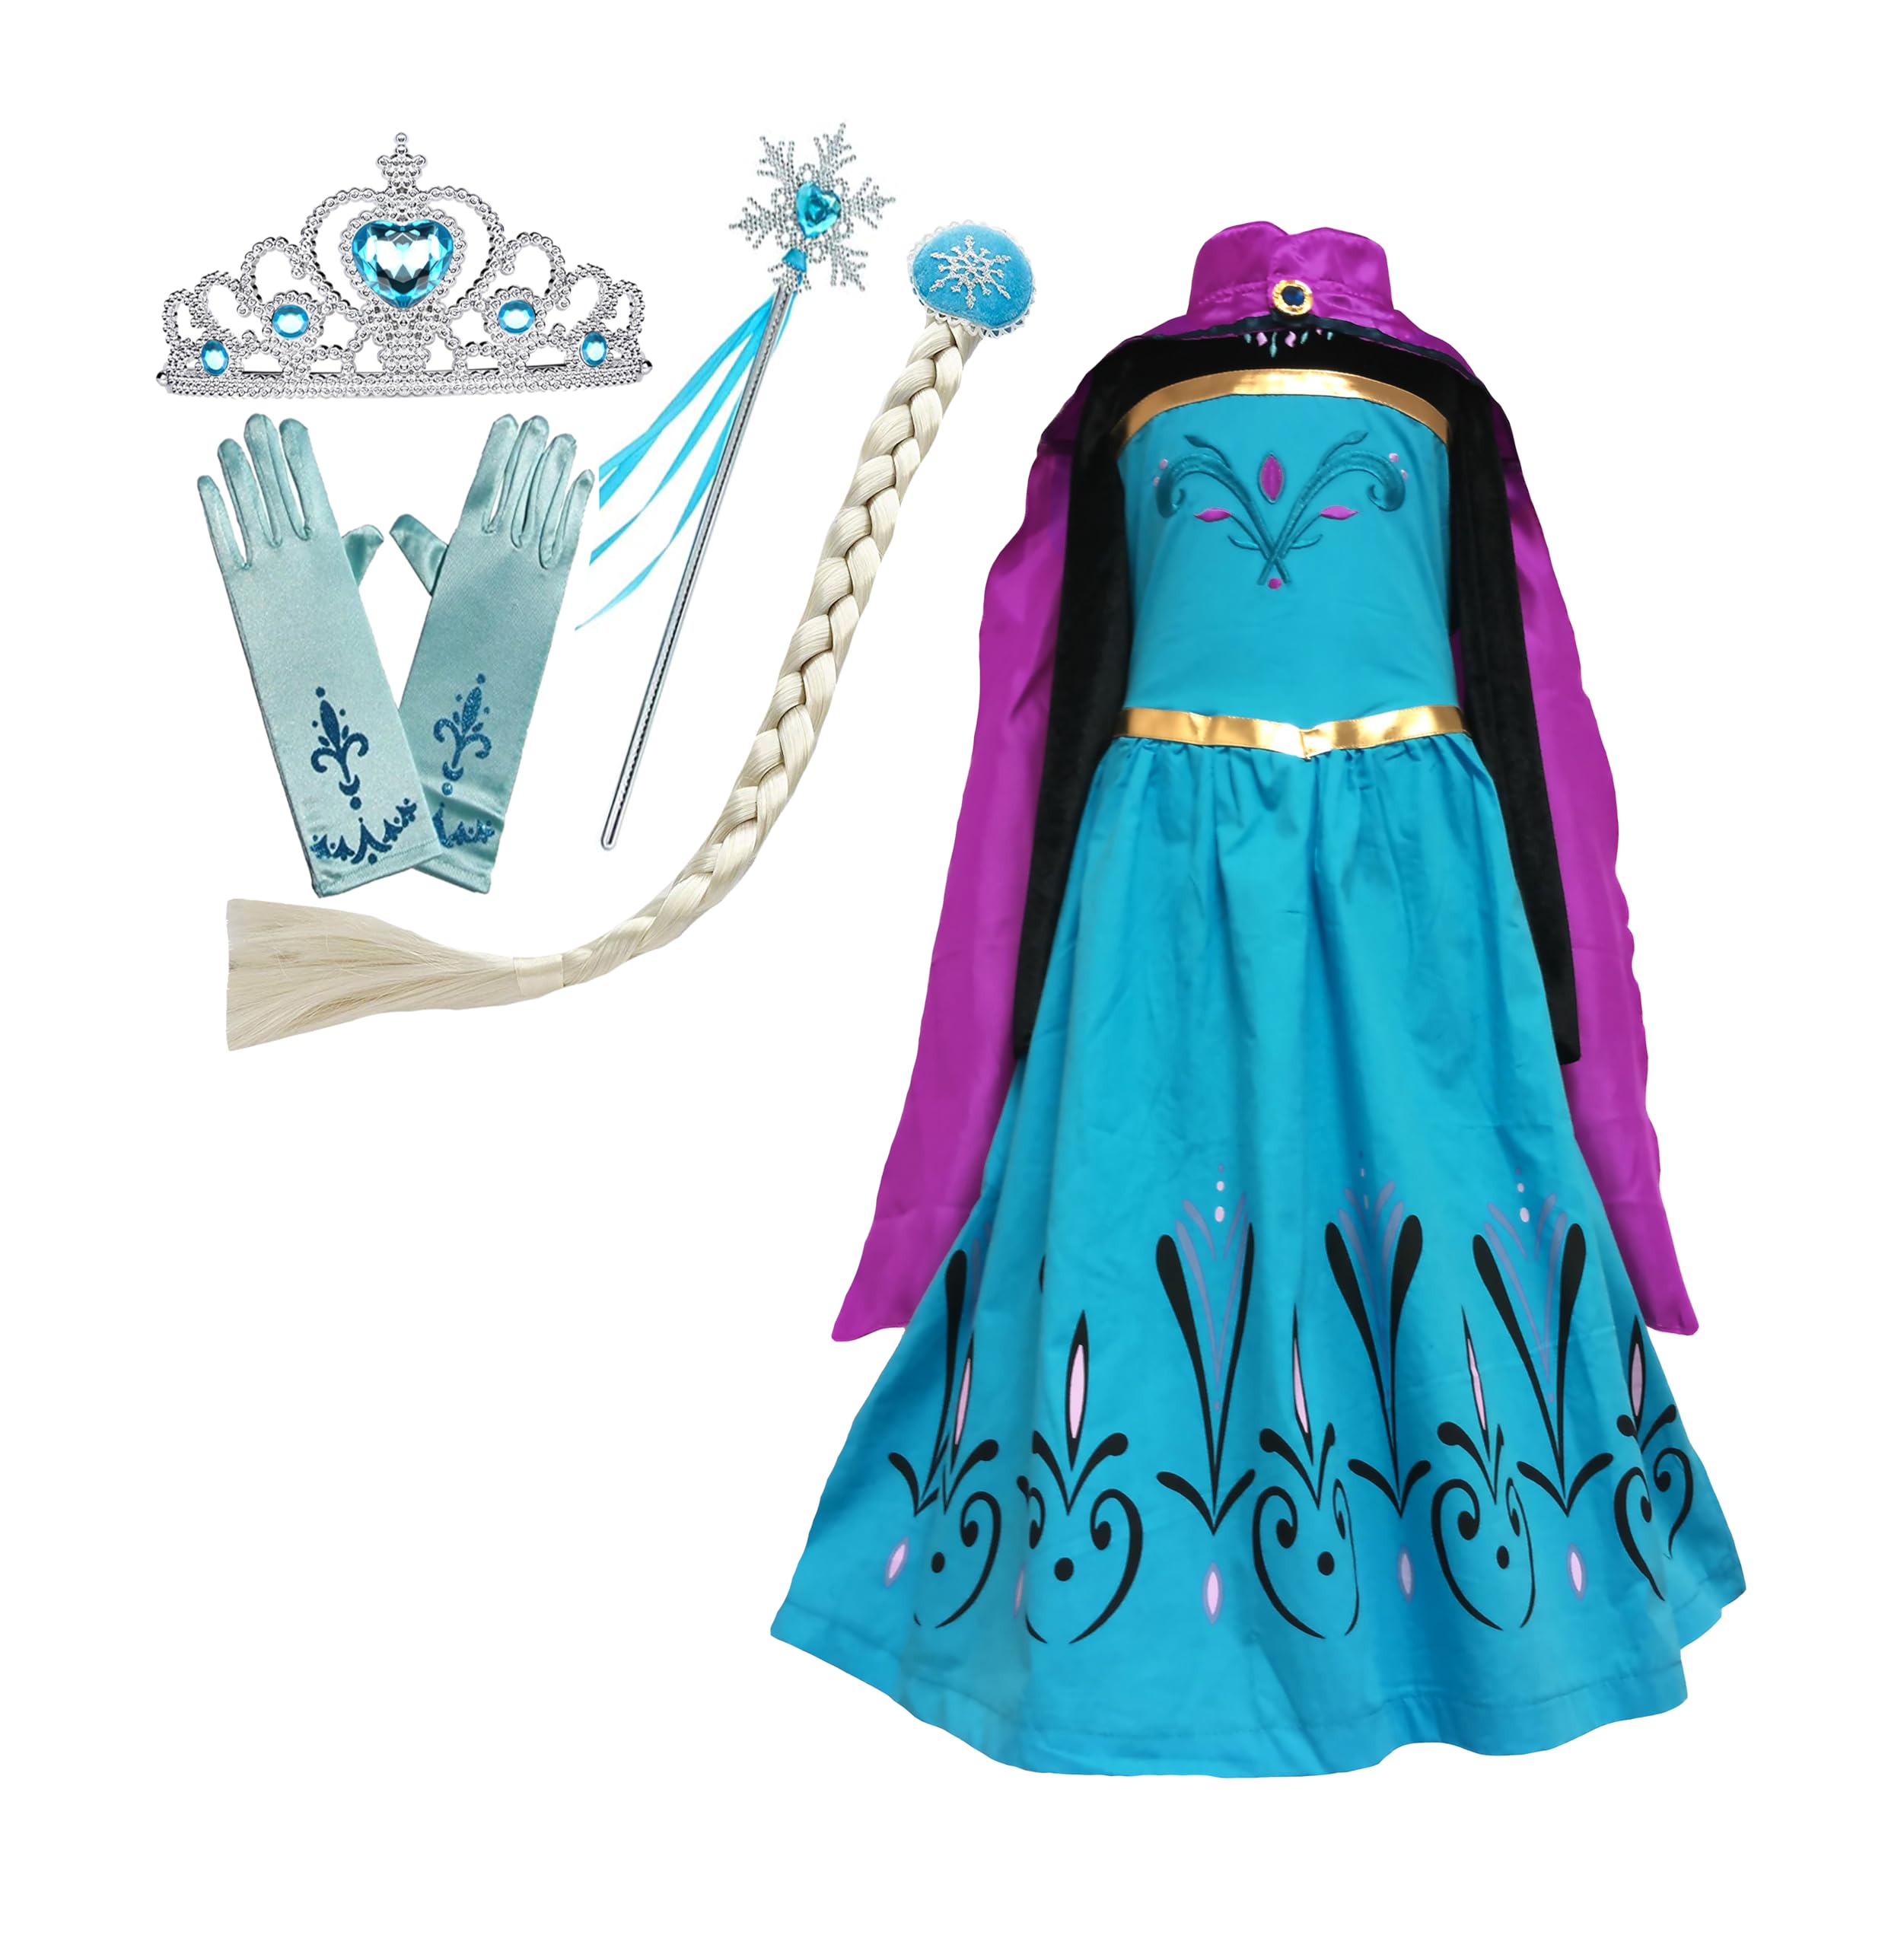 Cokos Box Girls Coronation Dress Costume Cape Gloves Tiara Crown Accessories Kids Set (Multicolored, 6 Years)